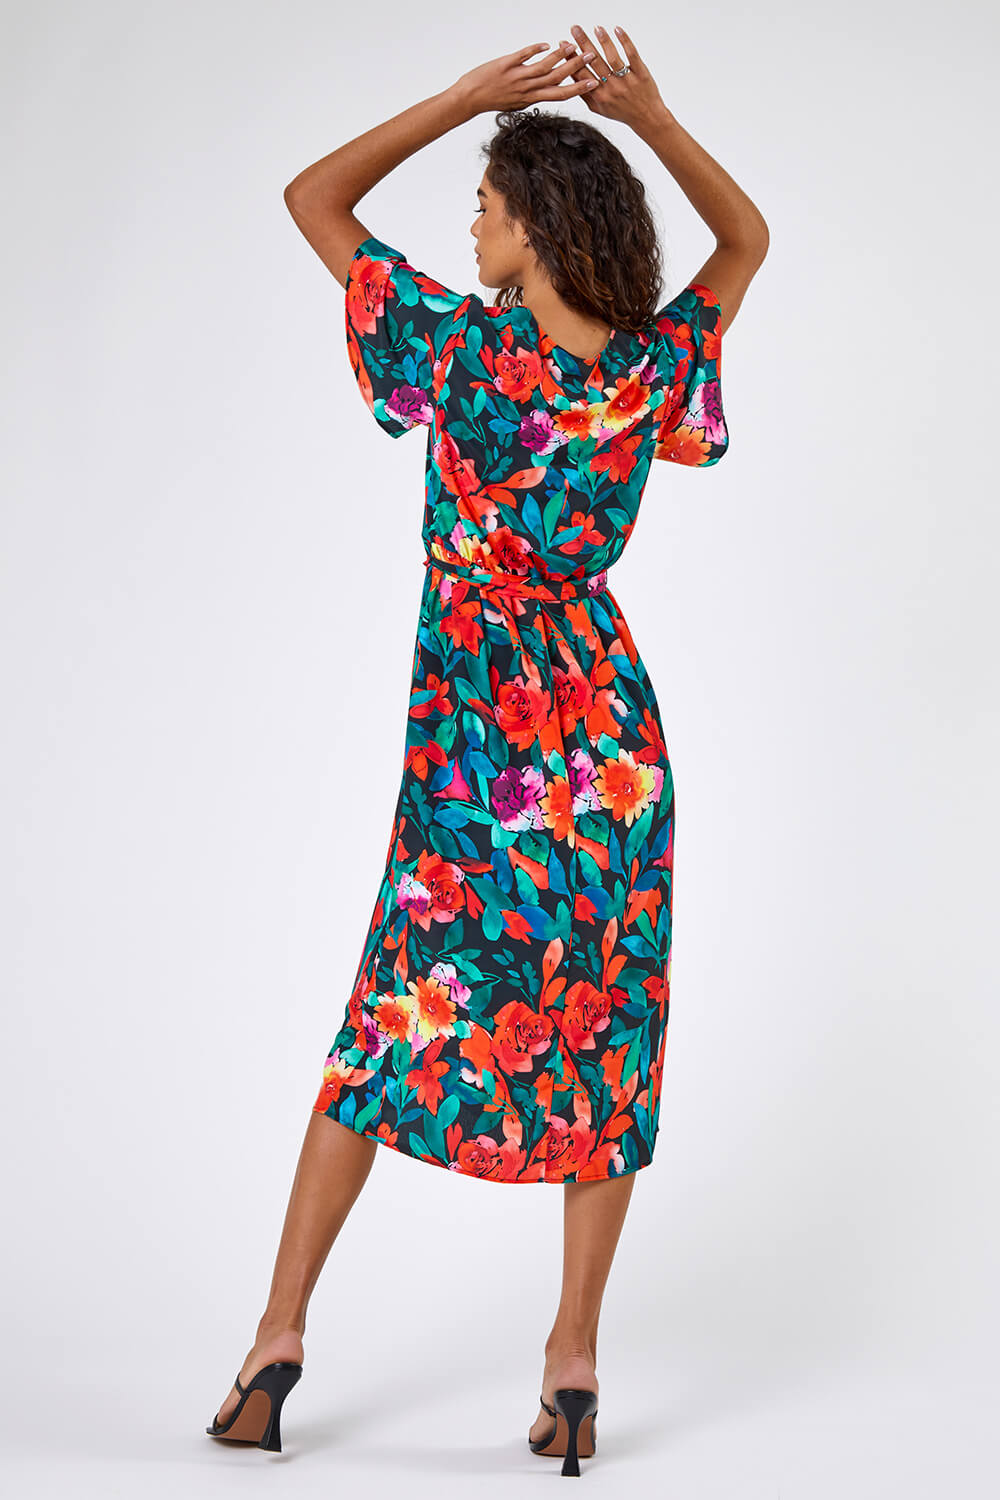 ORANGE Floral Print Frill Wrap Midi Dress, Image 3 of 5